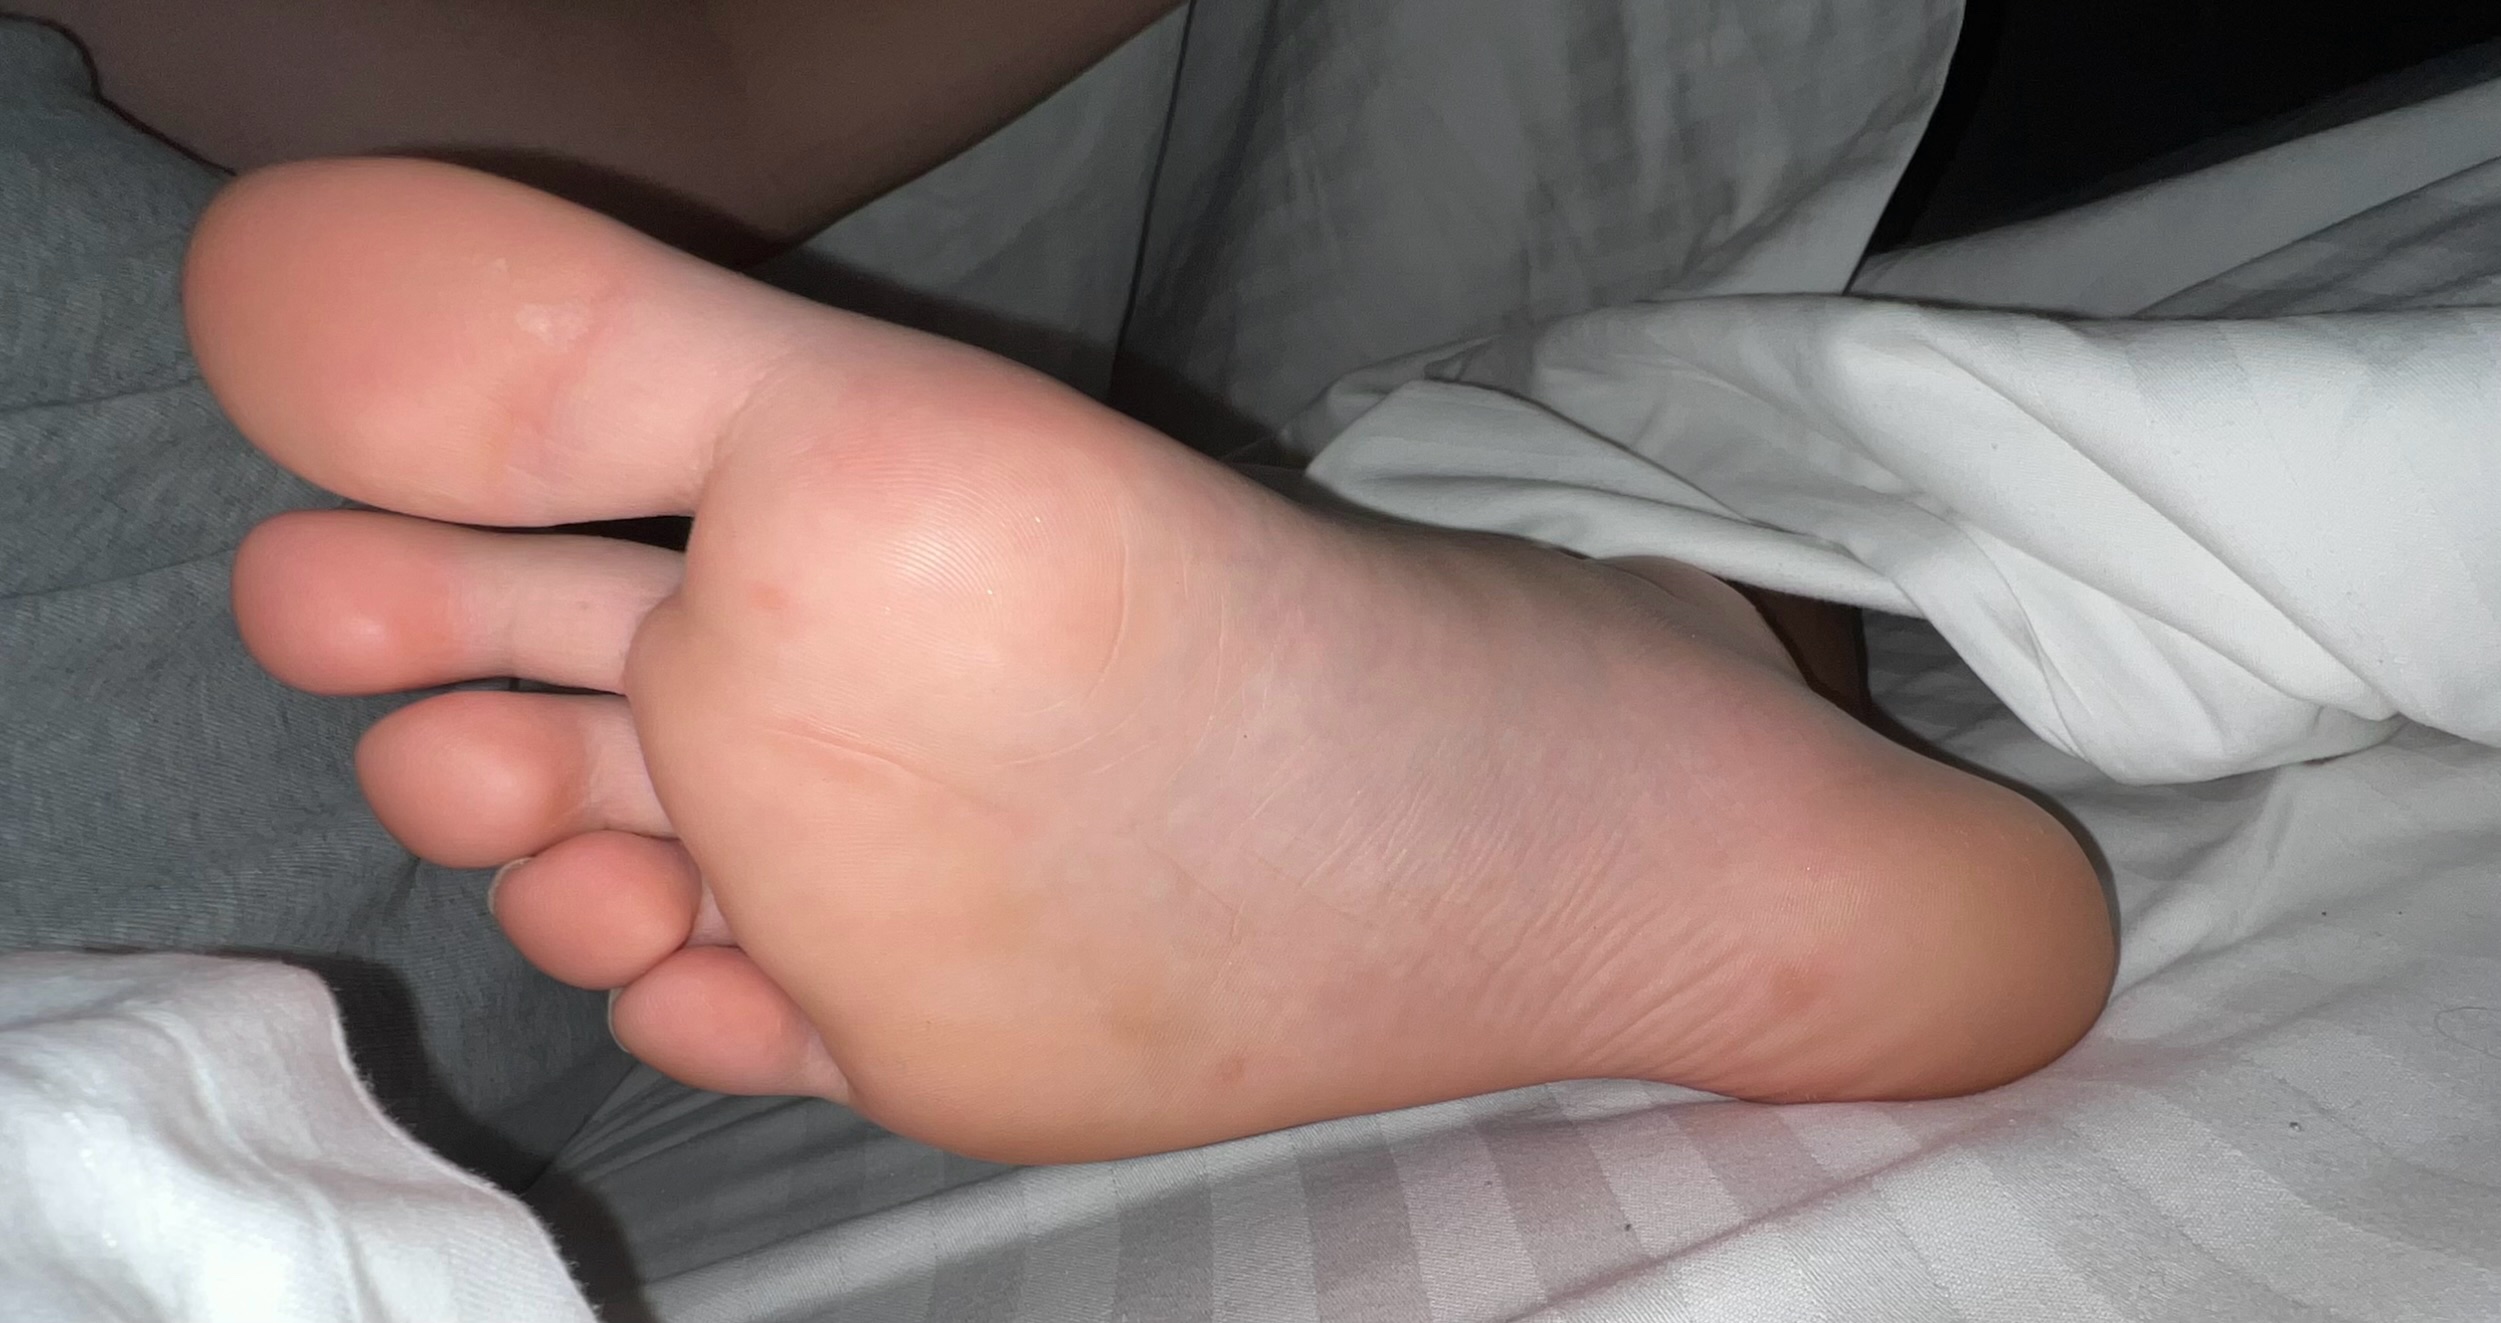 Cosmina’s feet